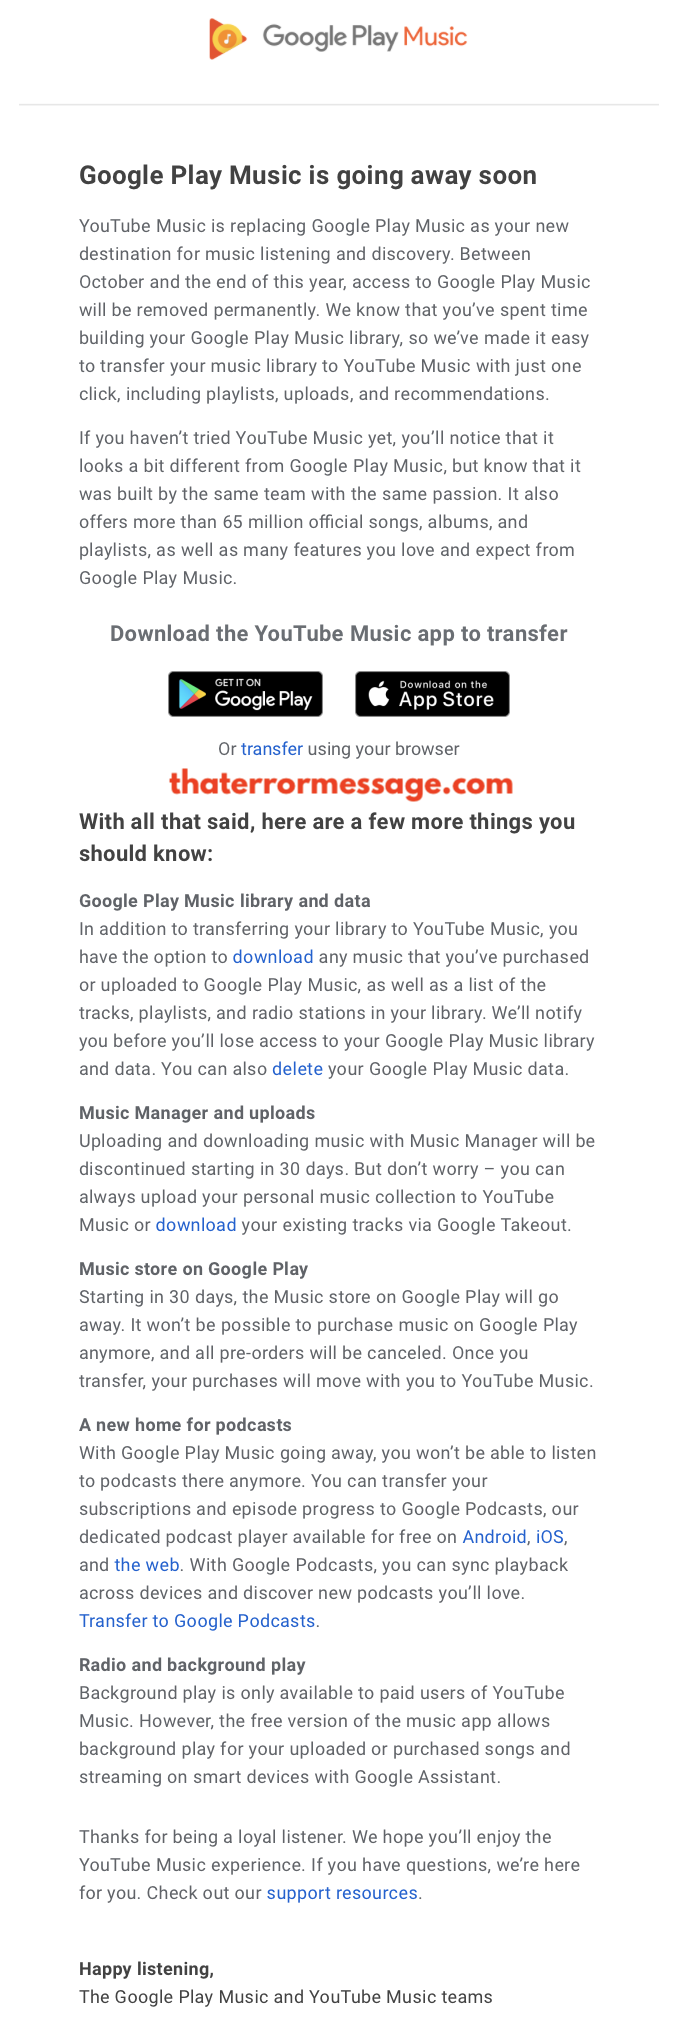 Google Play Music Is Going Away Soon